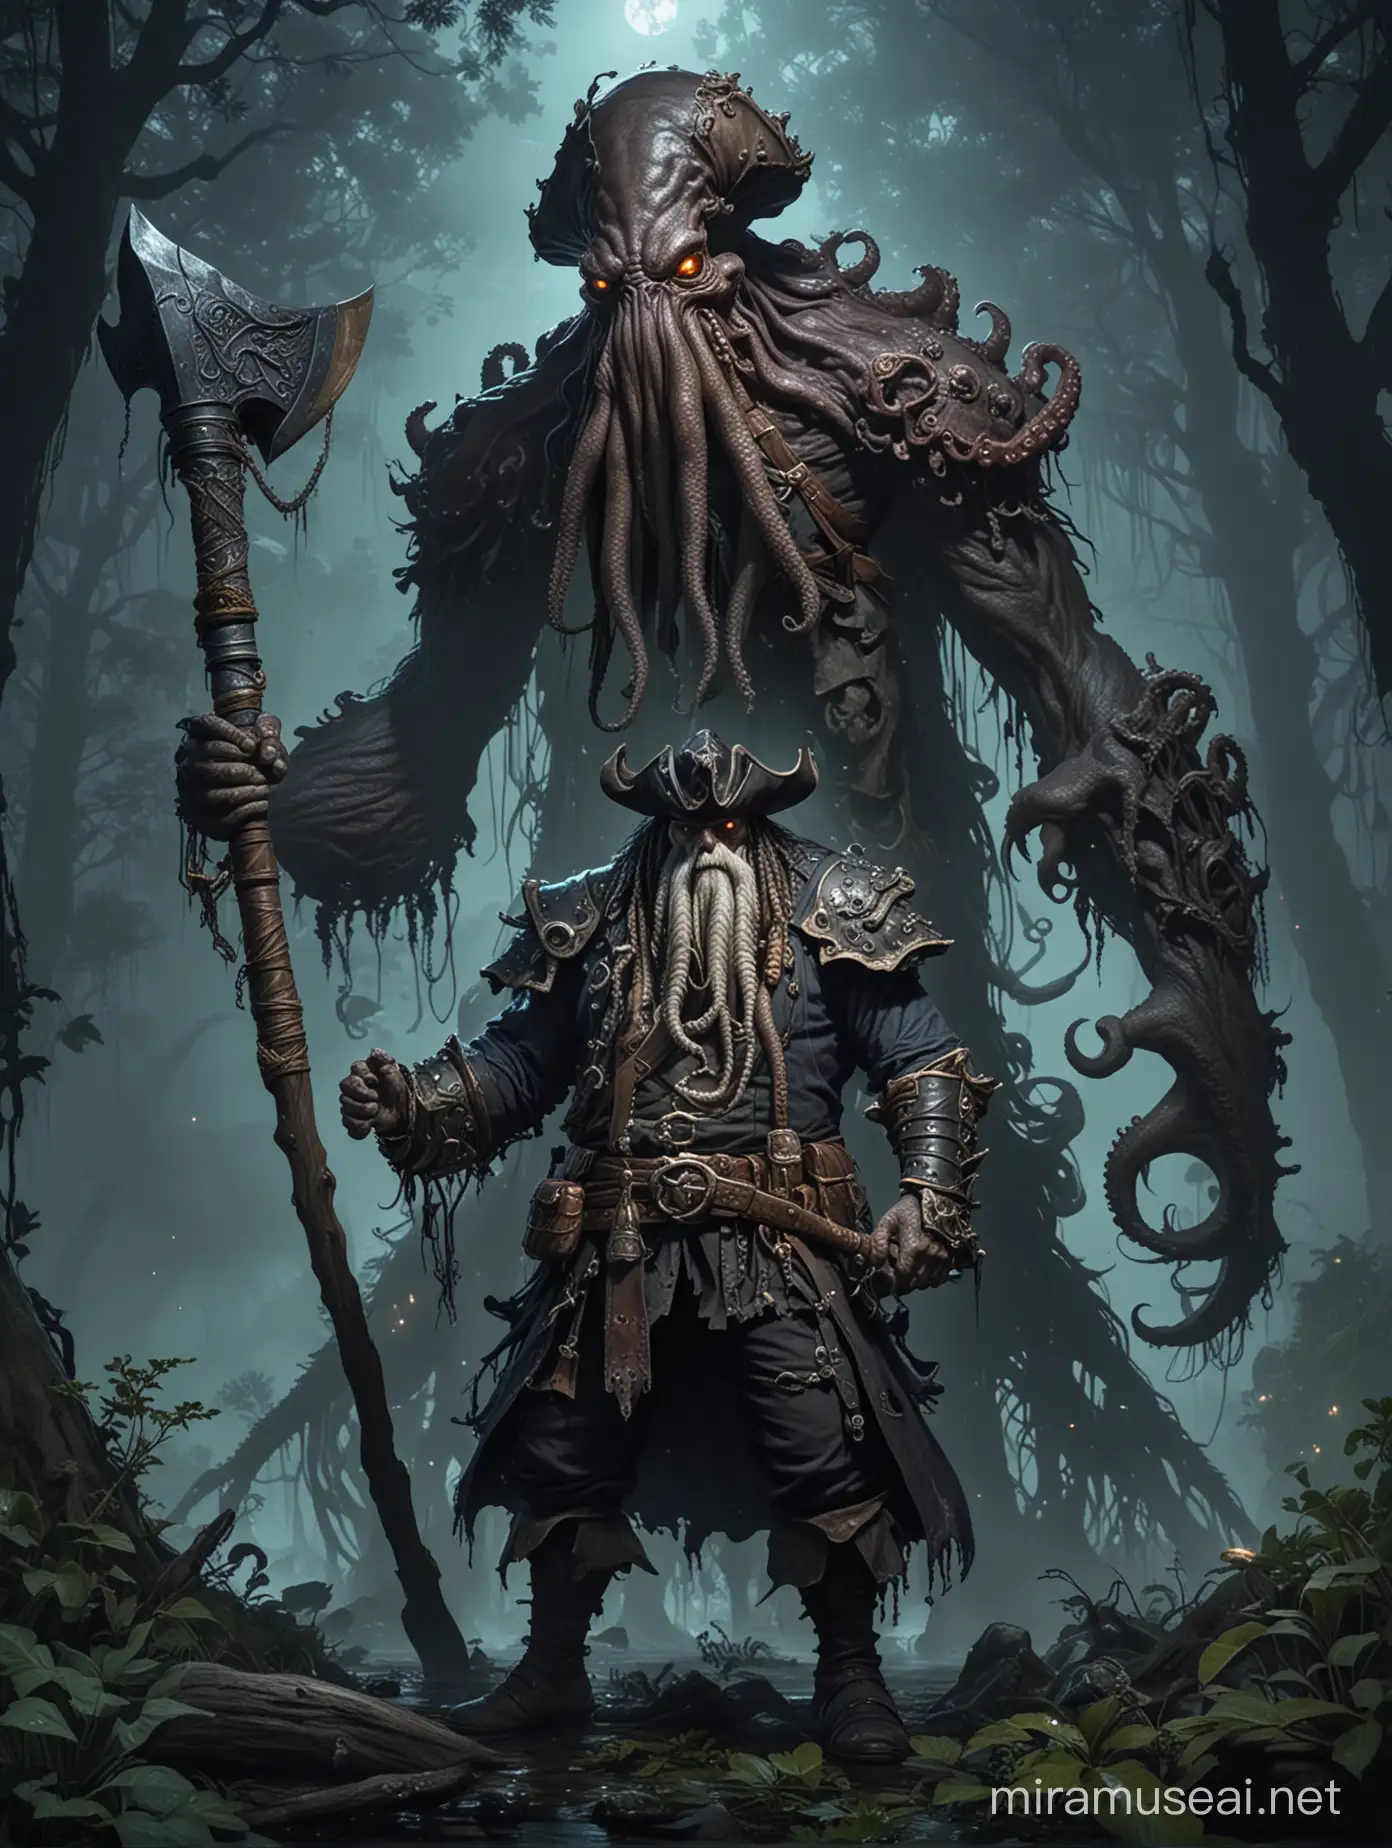 OctopusHeaded Pirate Monster in a Dark Swamp at Night